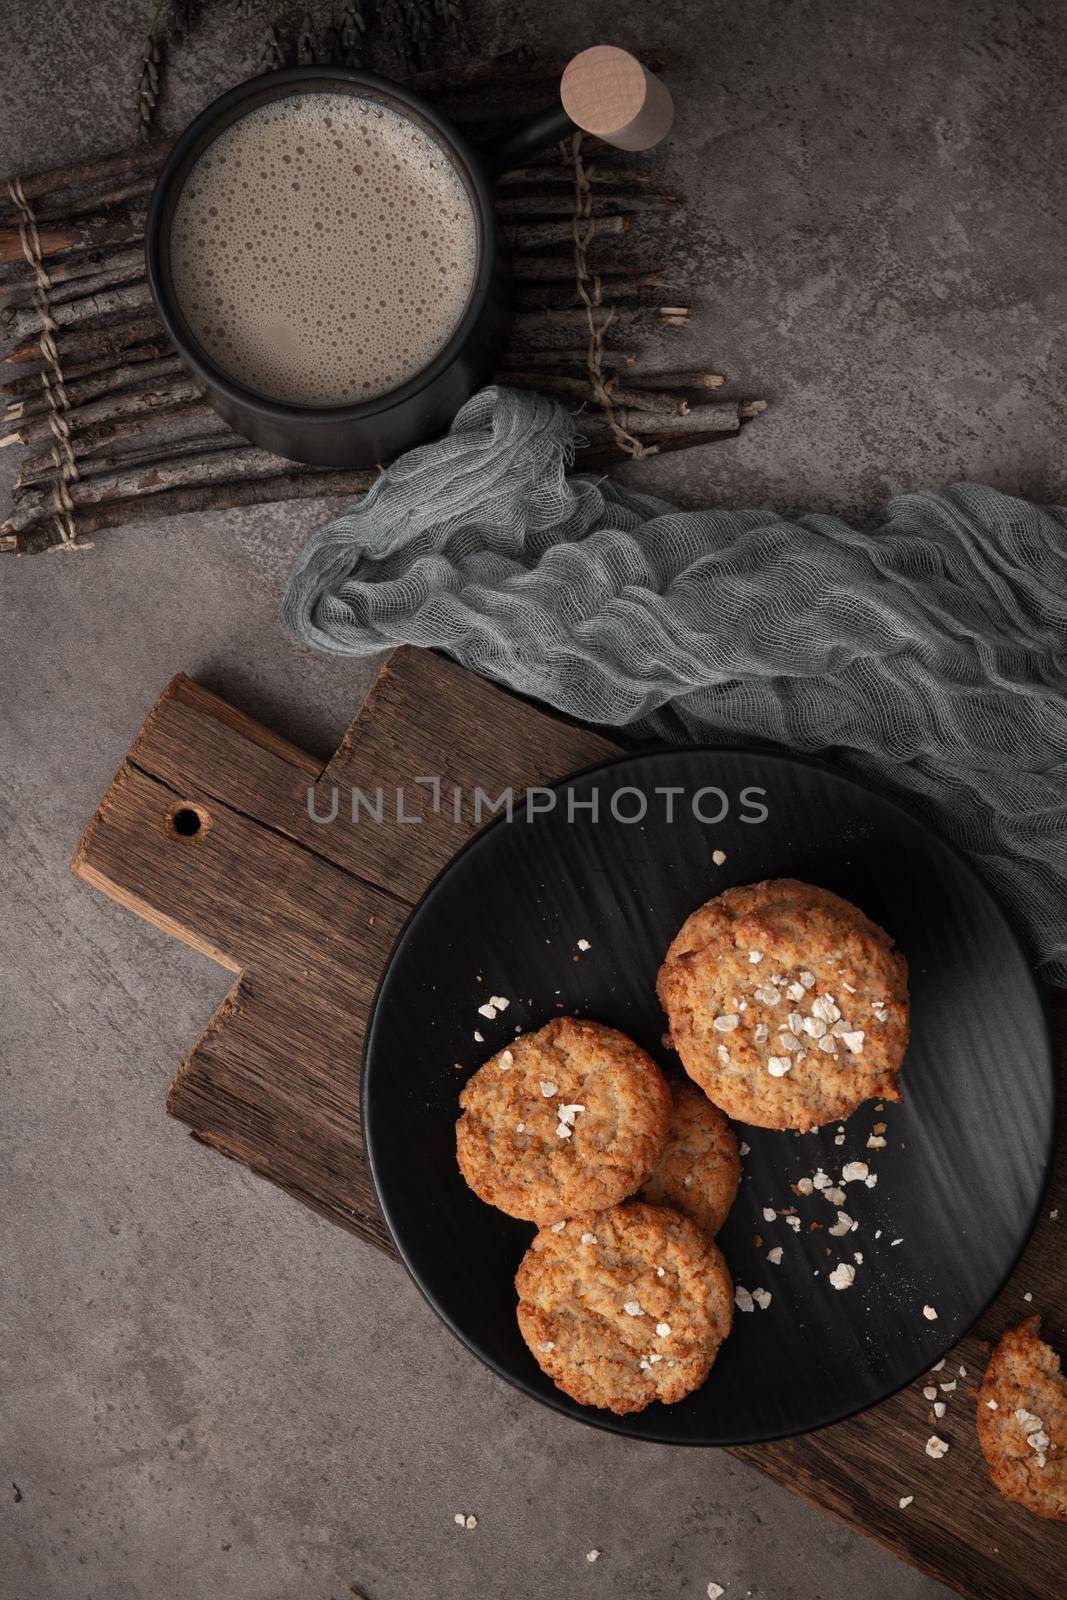 Homemade oatmeal raisin cookies by homydesign